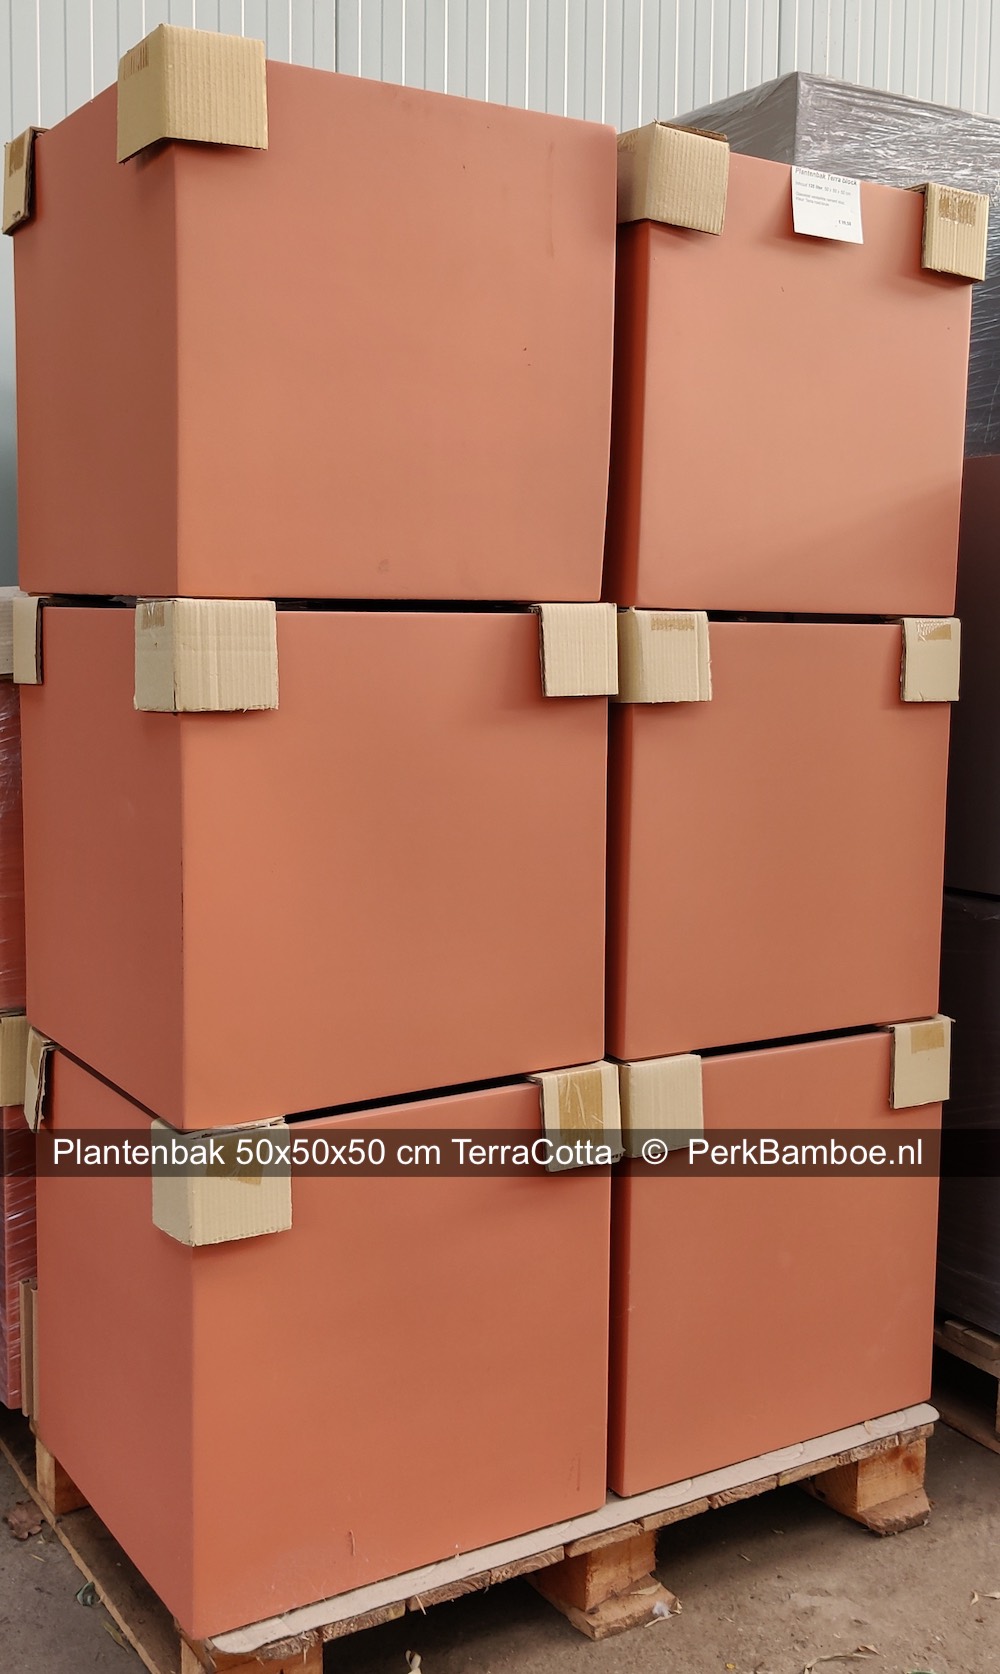 Plantenbak terracotta vierkant kubus 50x50x50 cm PerkBamboe nl kopie